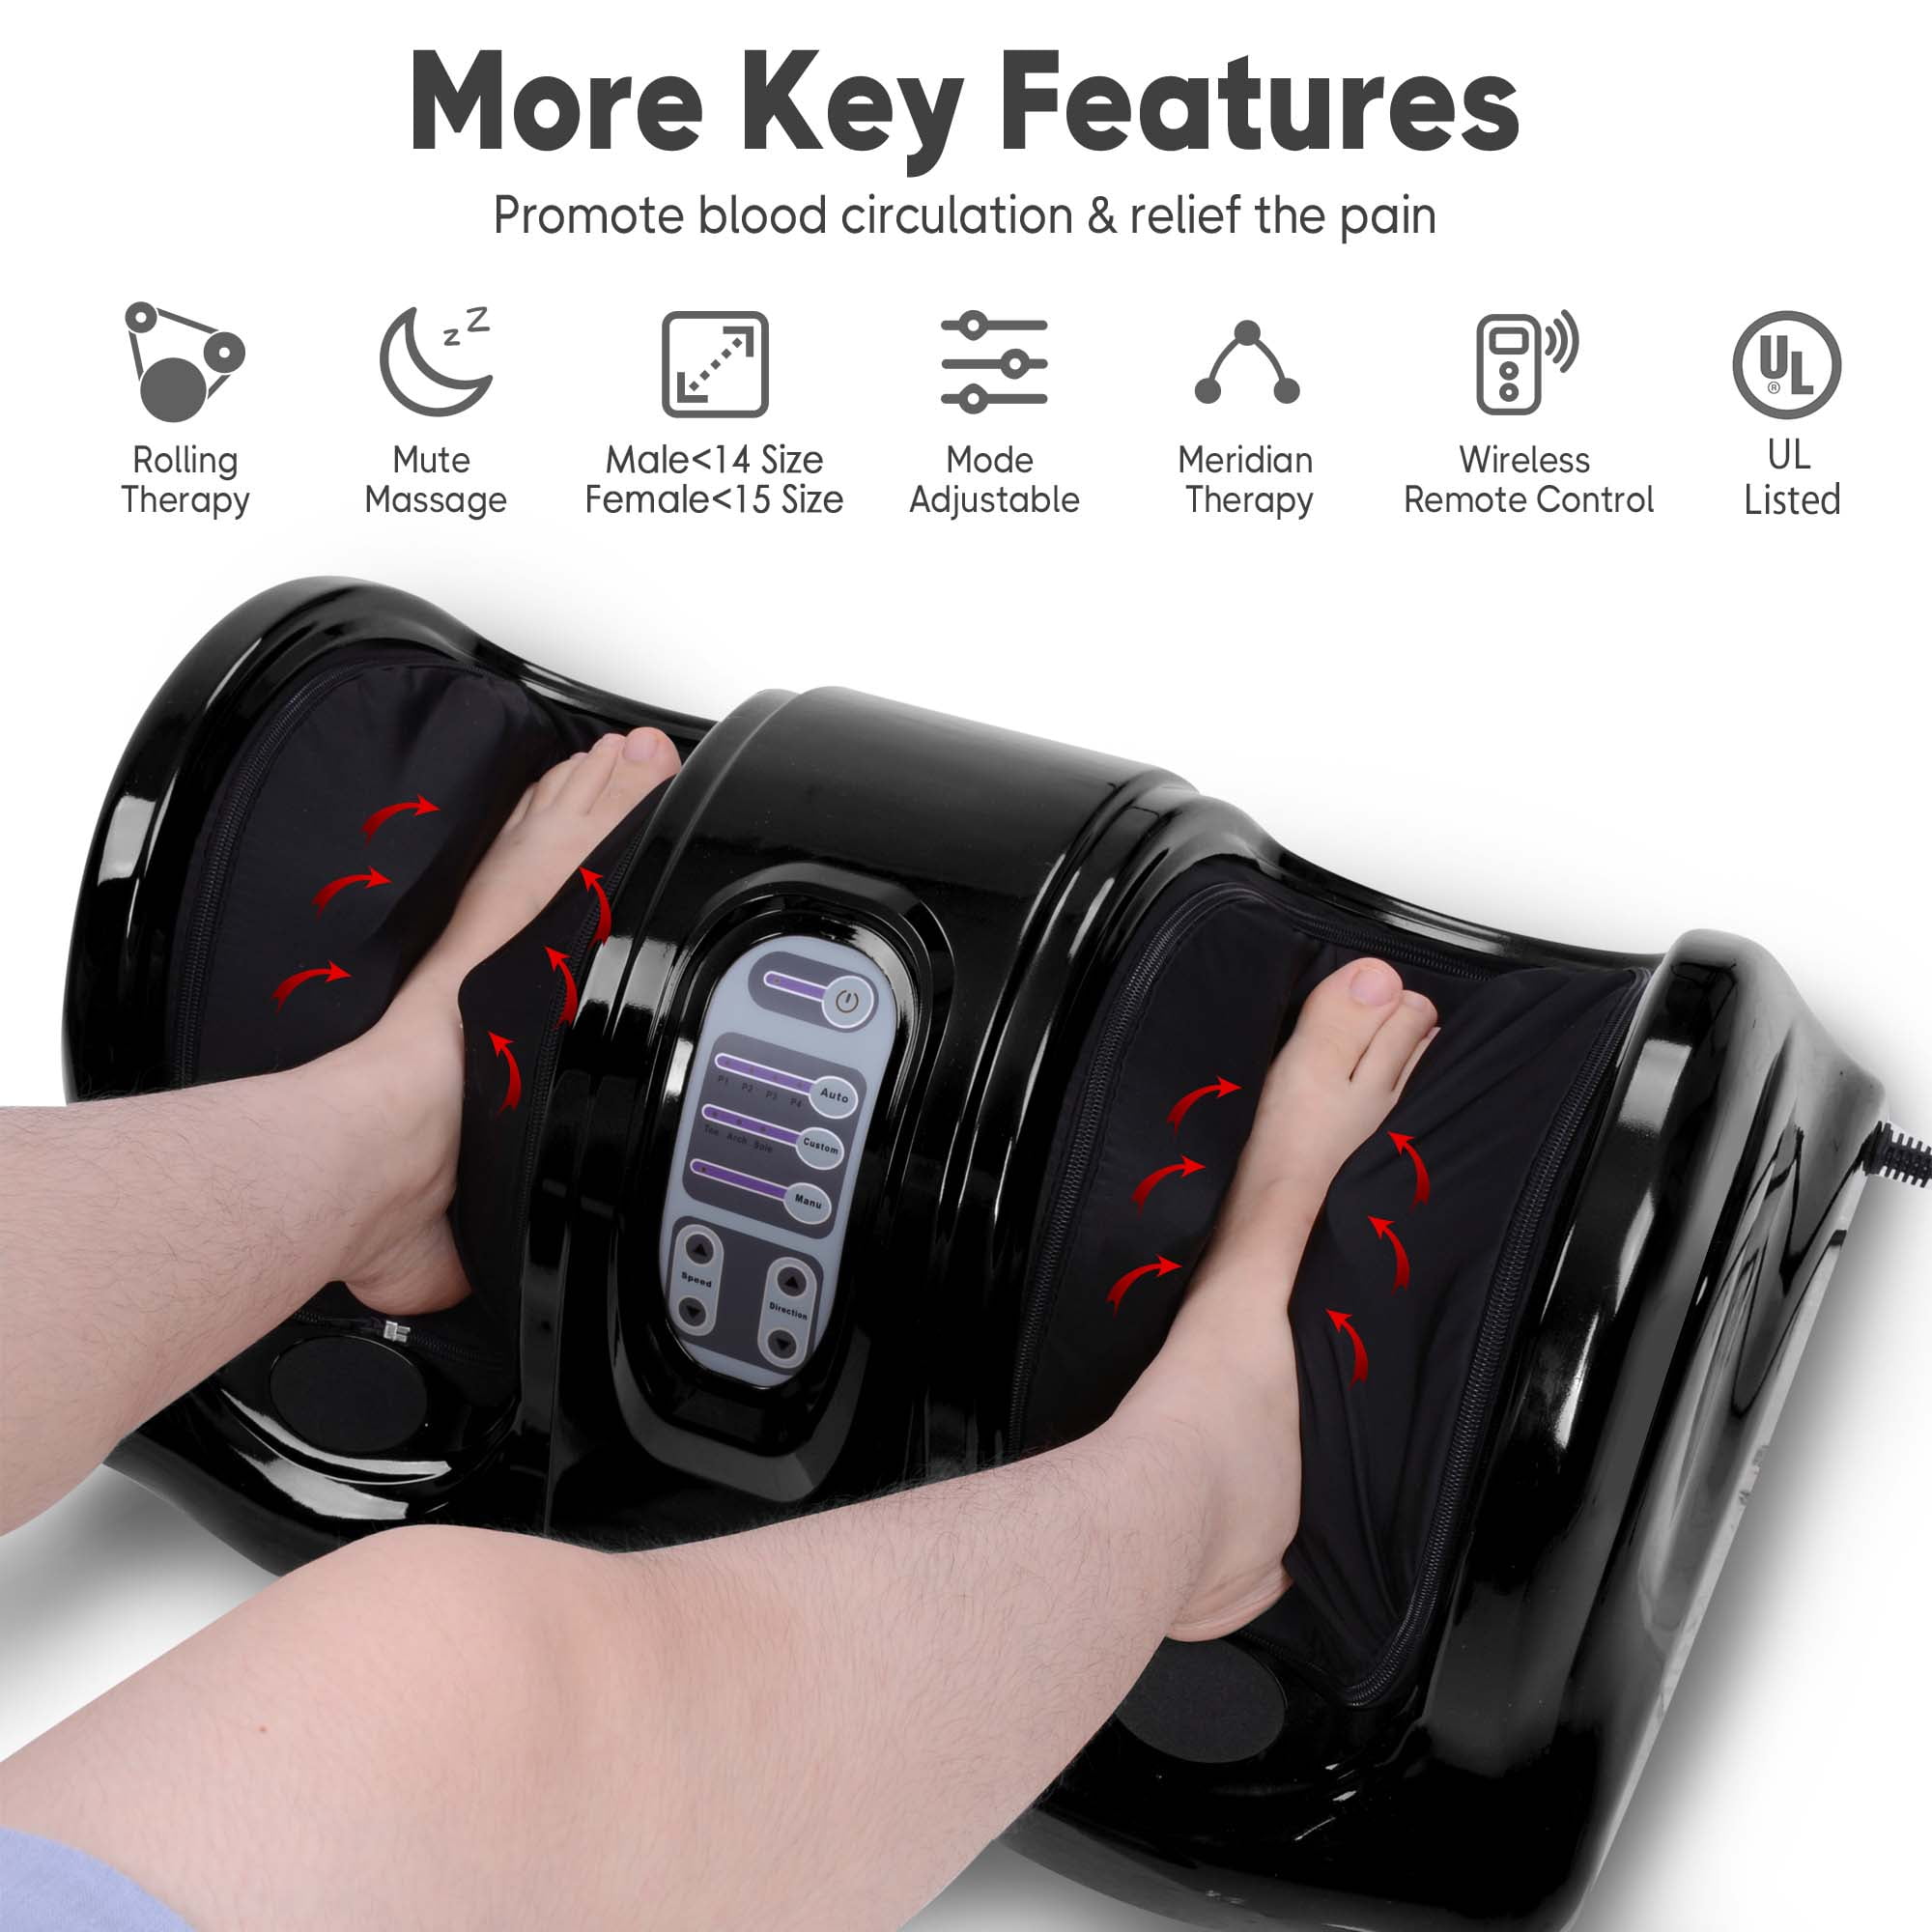 HealthmateForever 6 heads remote control kneading massage pillow, Shiatsu  foot neck & back massager …See more HealthmateForever 6 heads remote  control